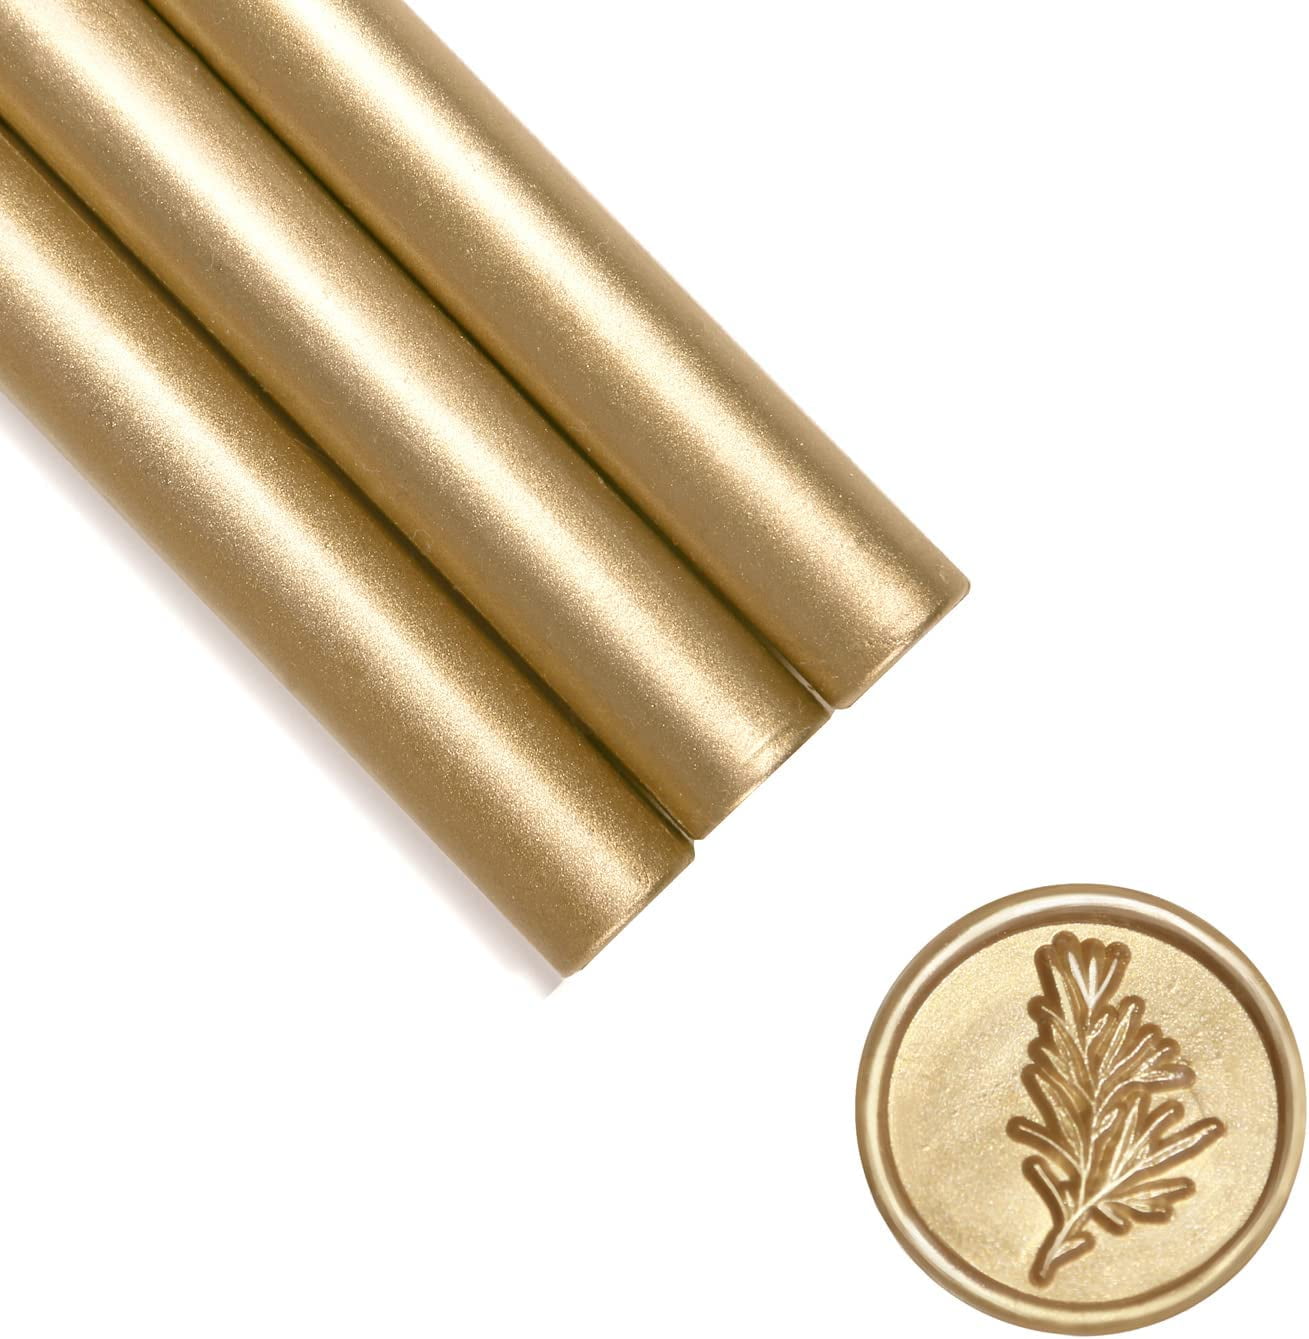 UNIQOOO Mailable Glue Gun Sealing Wax Sticks for Wax Seal Stamp - Metallic  Botanical Green, Great for Birthday Cards, Wedding Invitations, Envelope